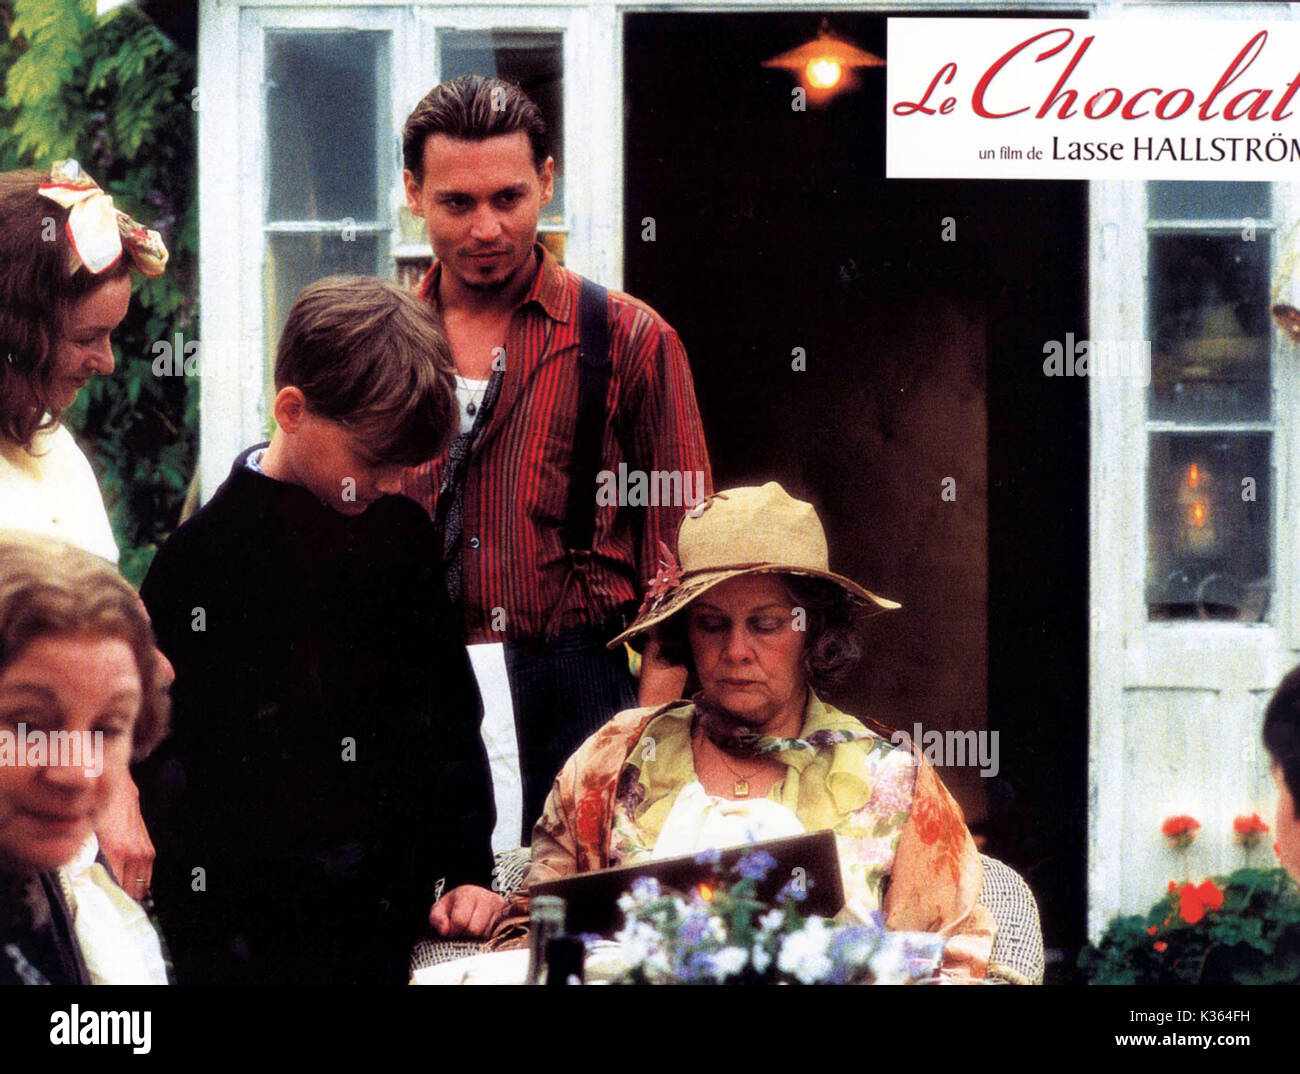 CHOCOLAT AURELIAN PARENT KOENIG, JOHNNY DEPP, JUDI DENCH CHOCOLAT     Date: 2000 Stock Photo